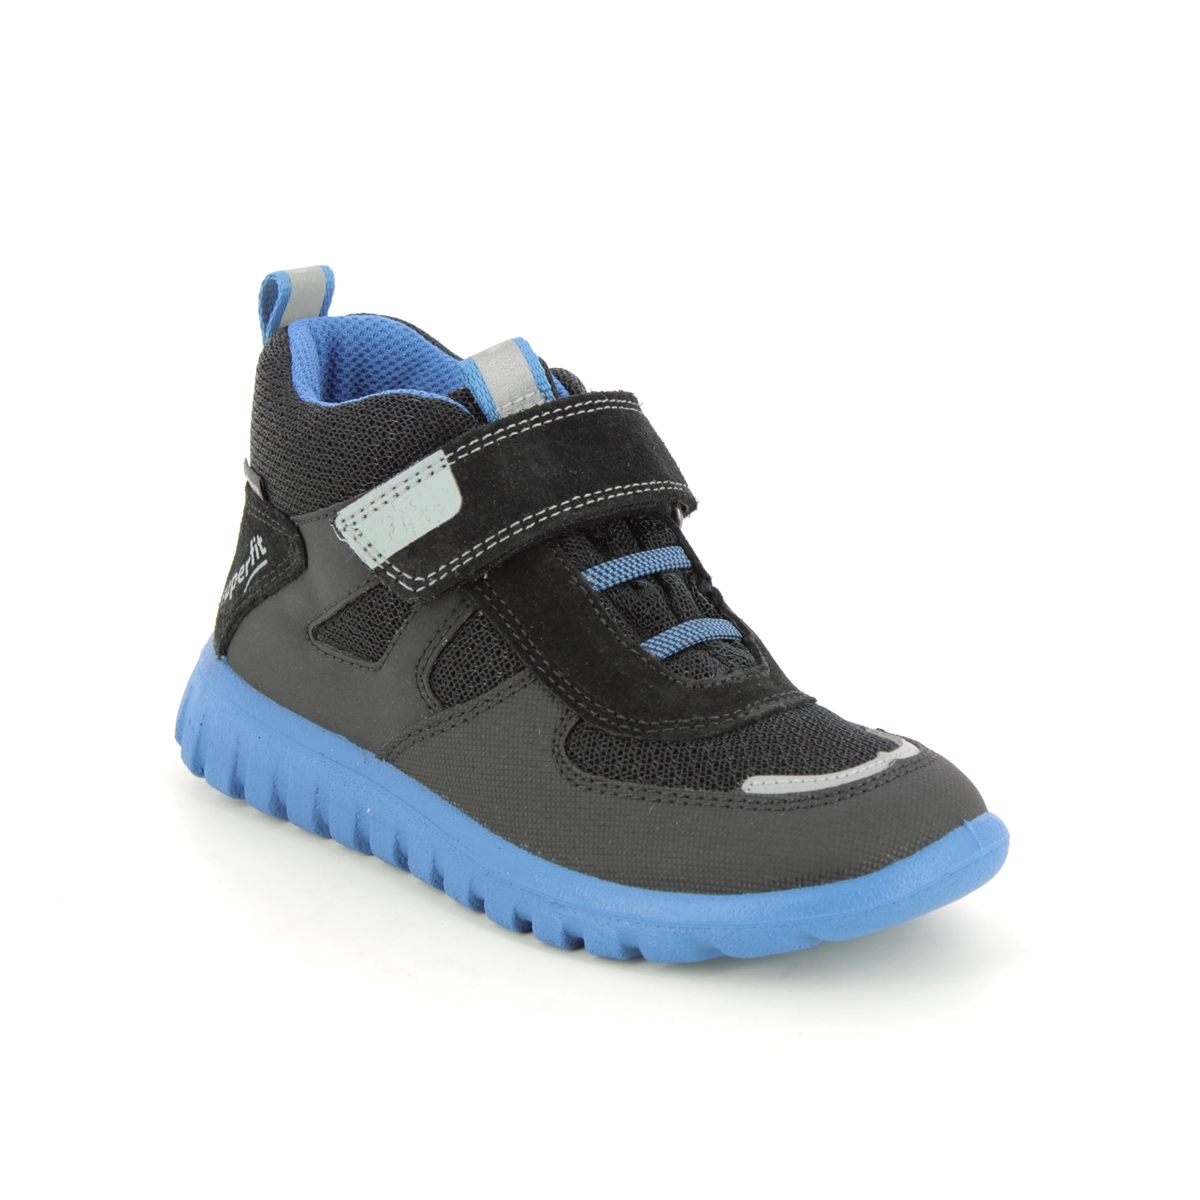 Superfit Sport7 Mini Gtx Black-blue Kids boys boots 1006196-0000 in a Plain Man-made in Size 28